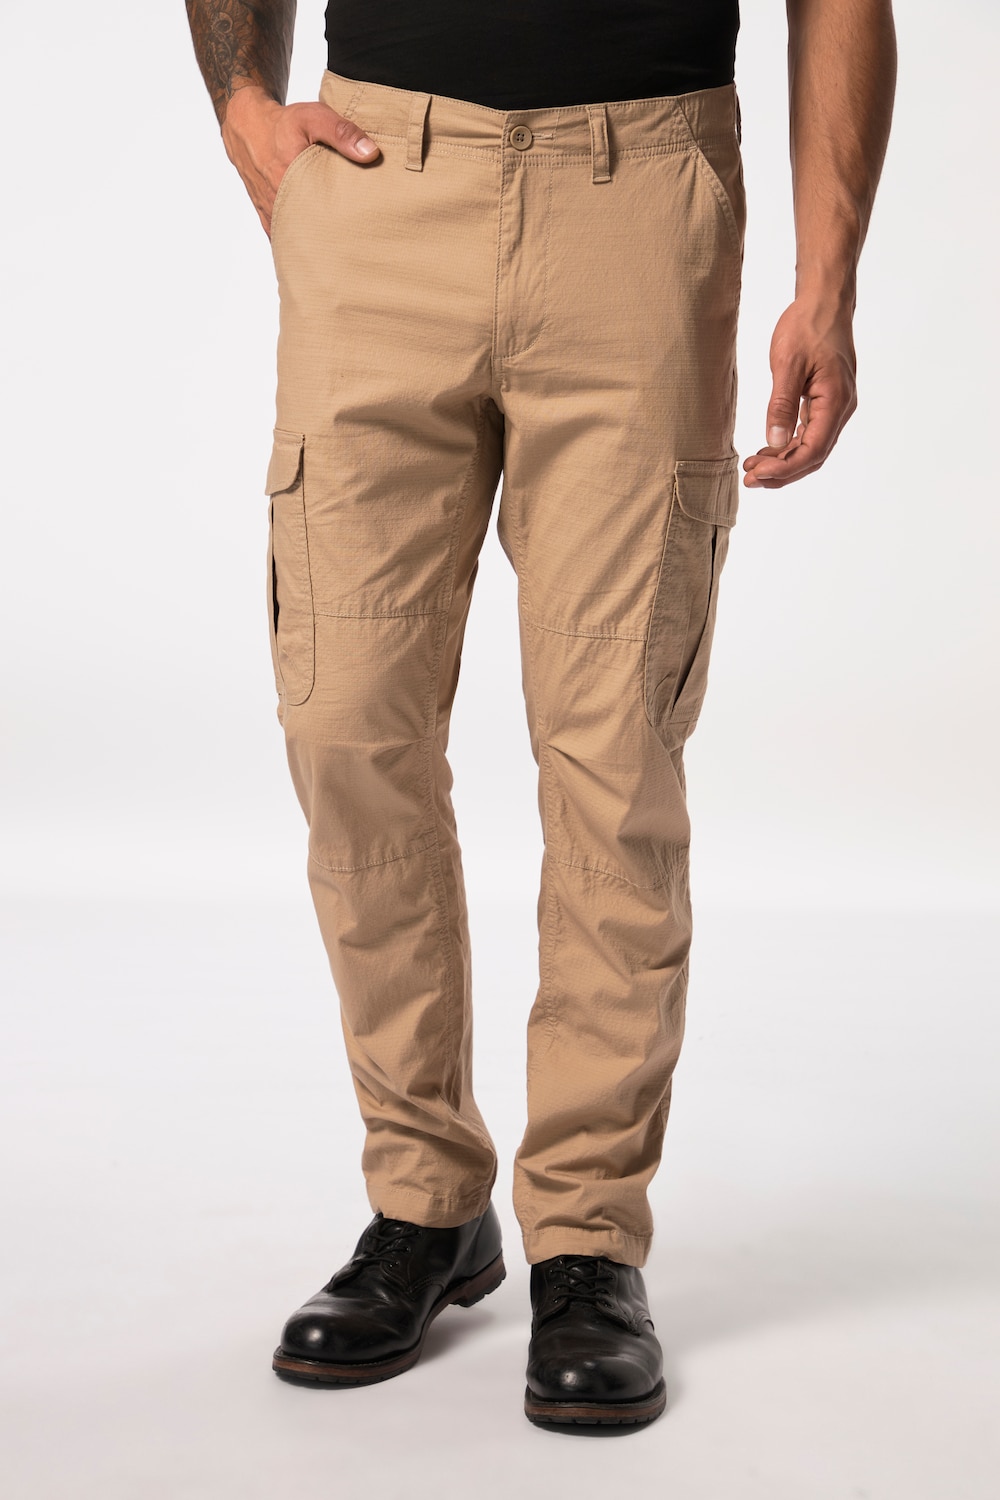 grandes tailles pantalon cargo flexnamic® en ripstop, hommes, marron, taille: 72, coton, jp1880